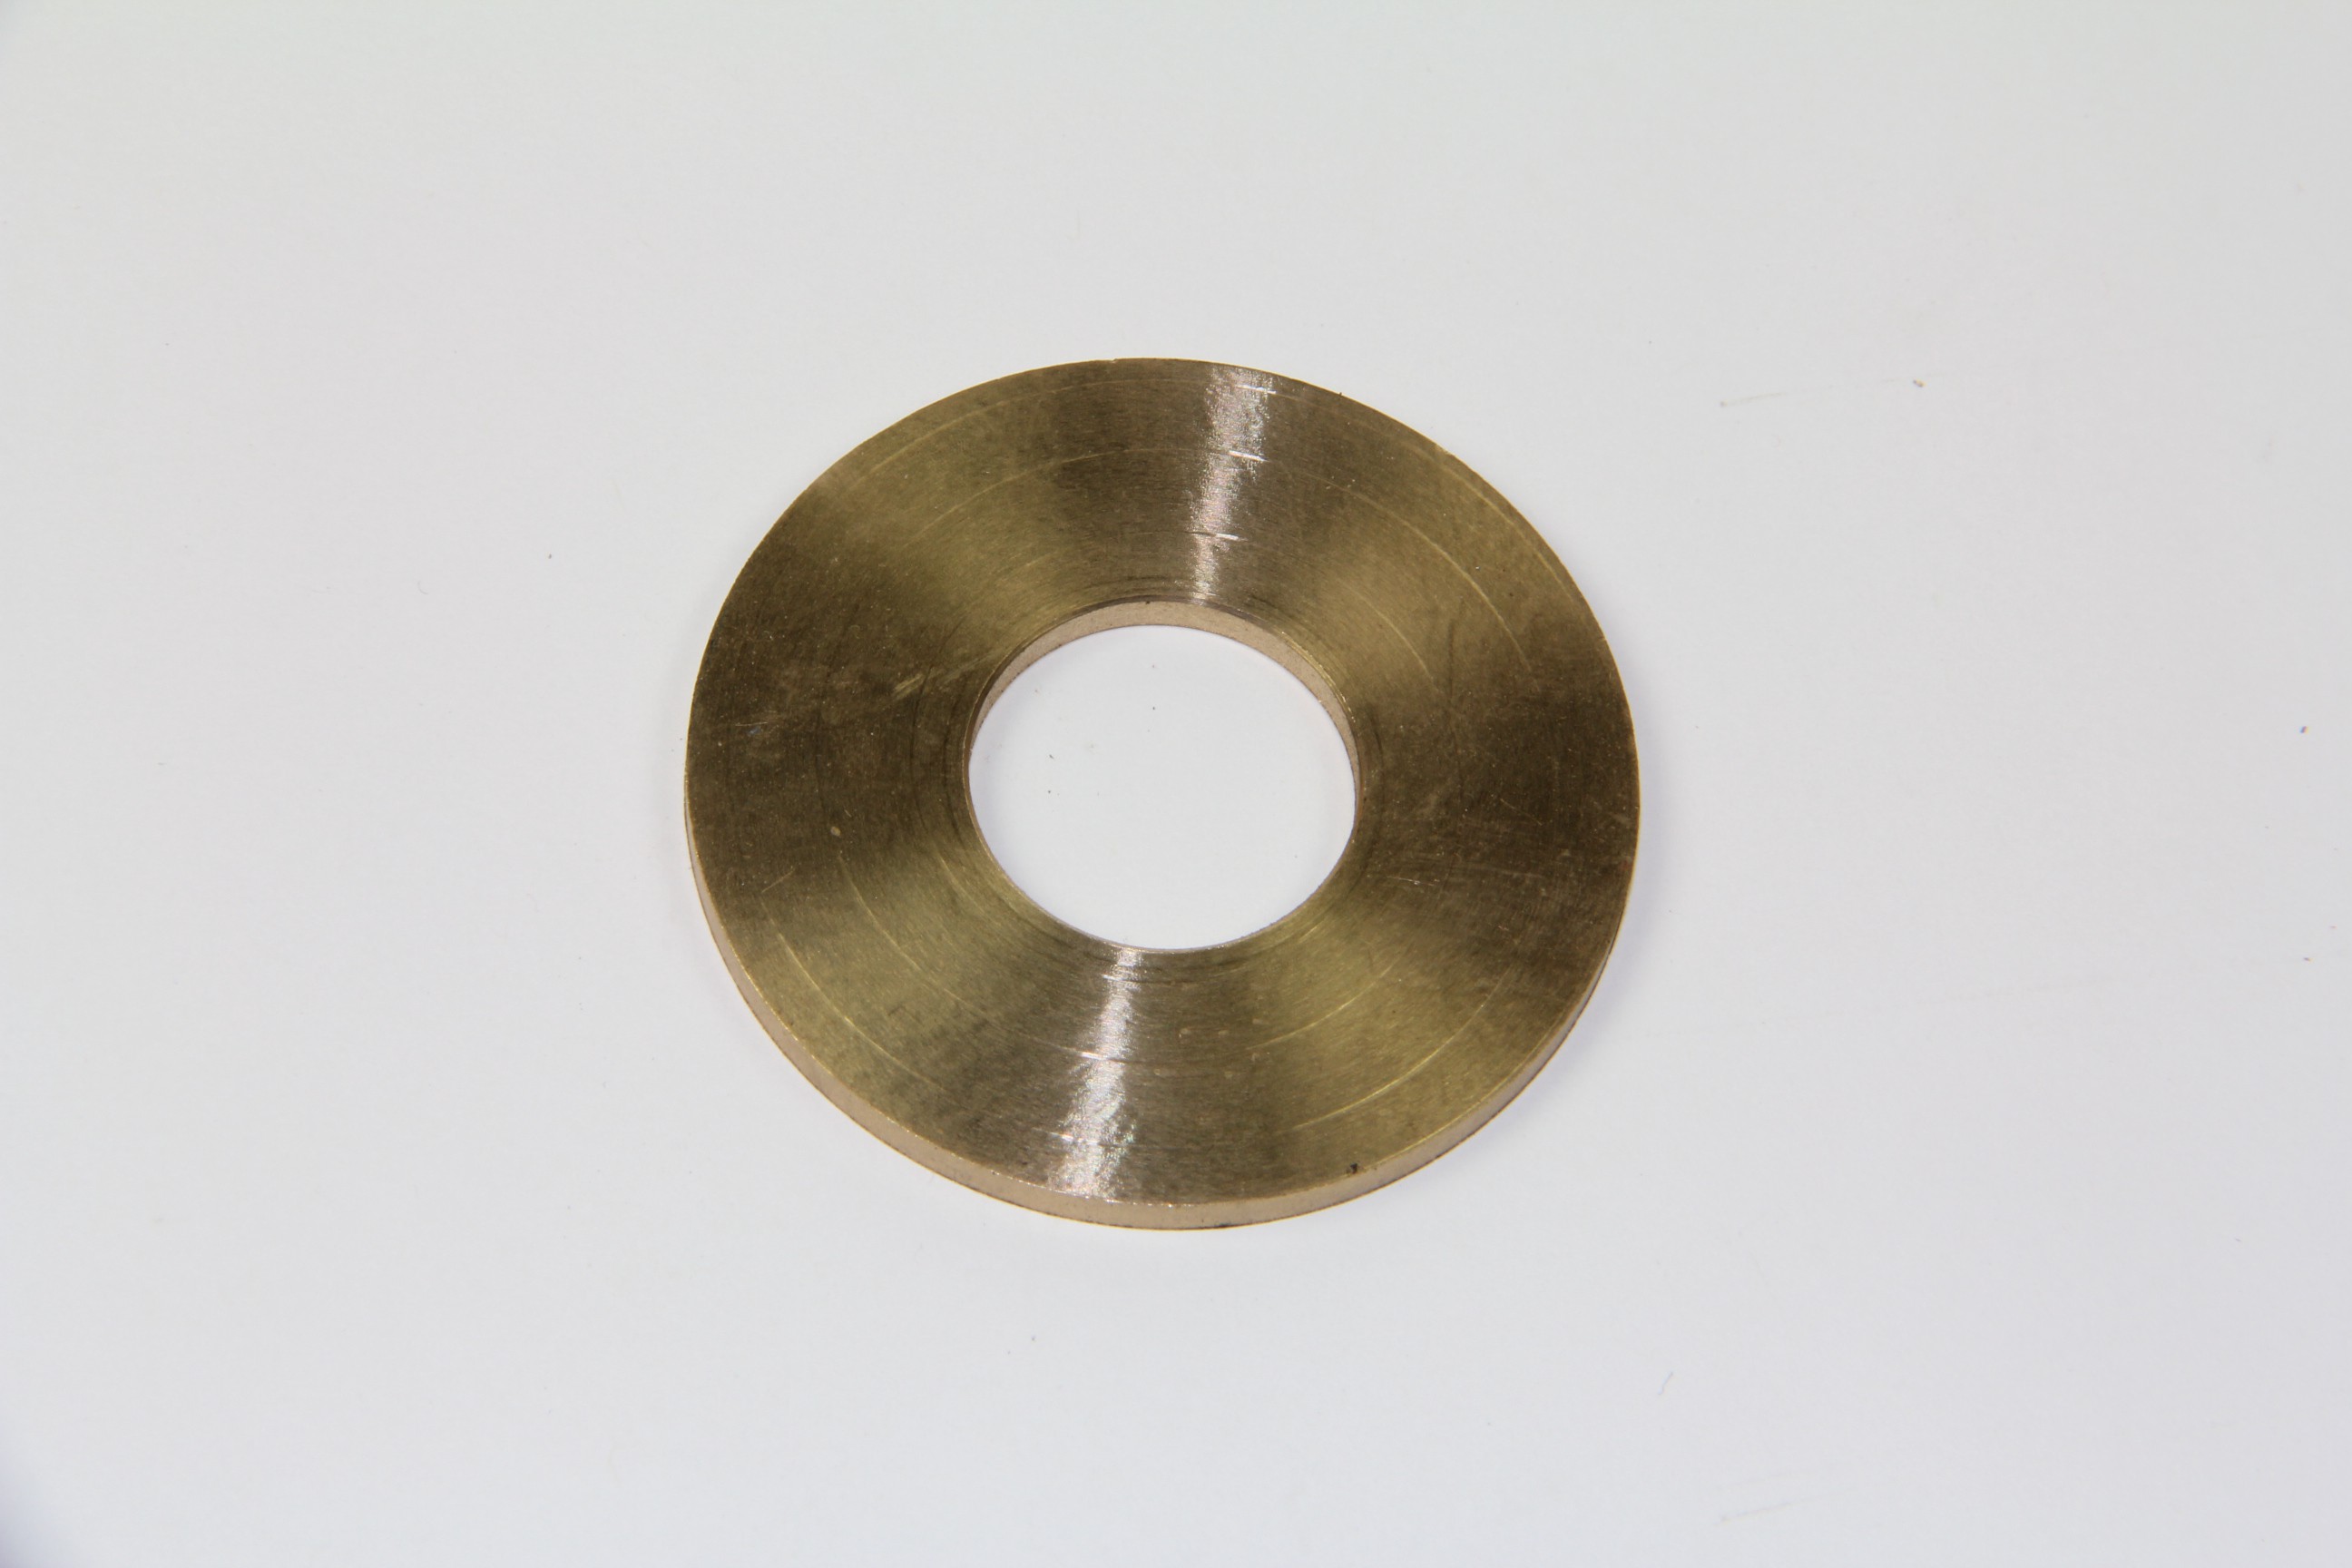 Feeding screw radial-thrust bearing